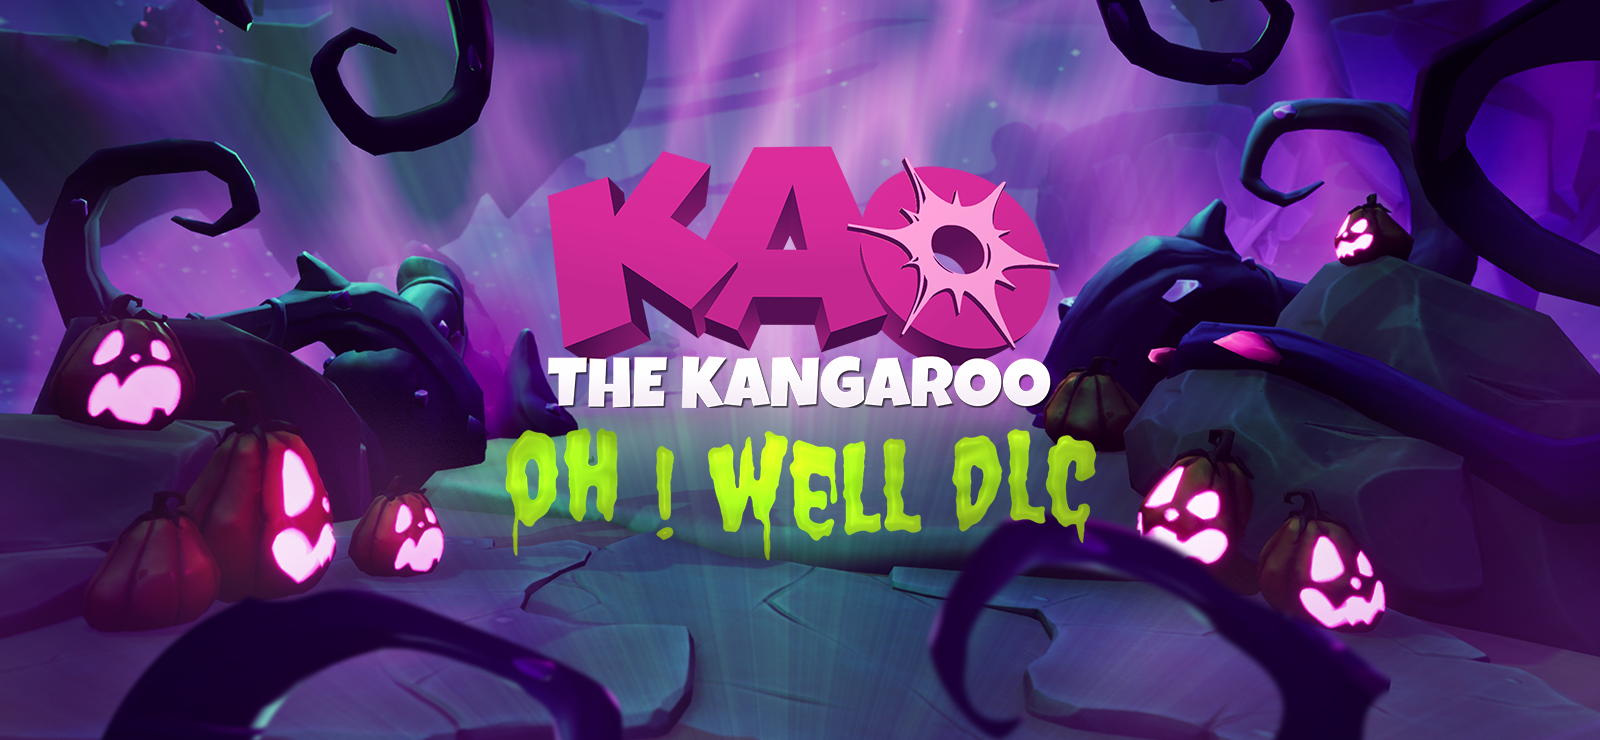 Kao The Kangaroo - Oh! Well